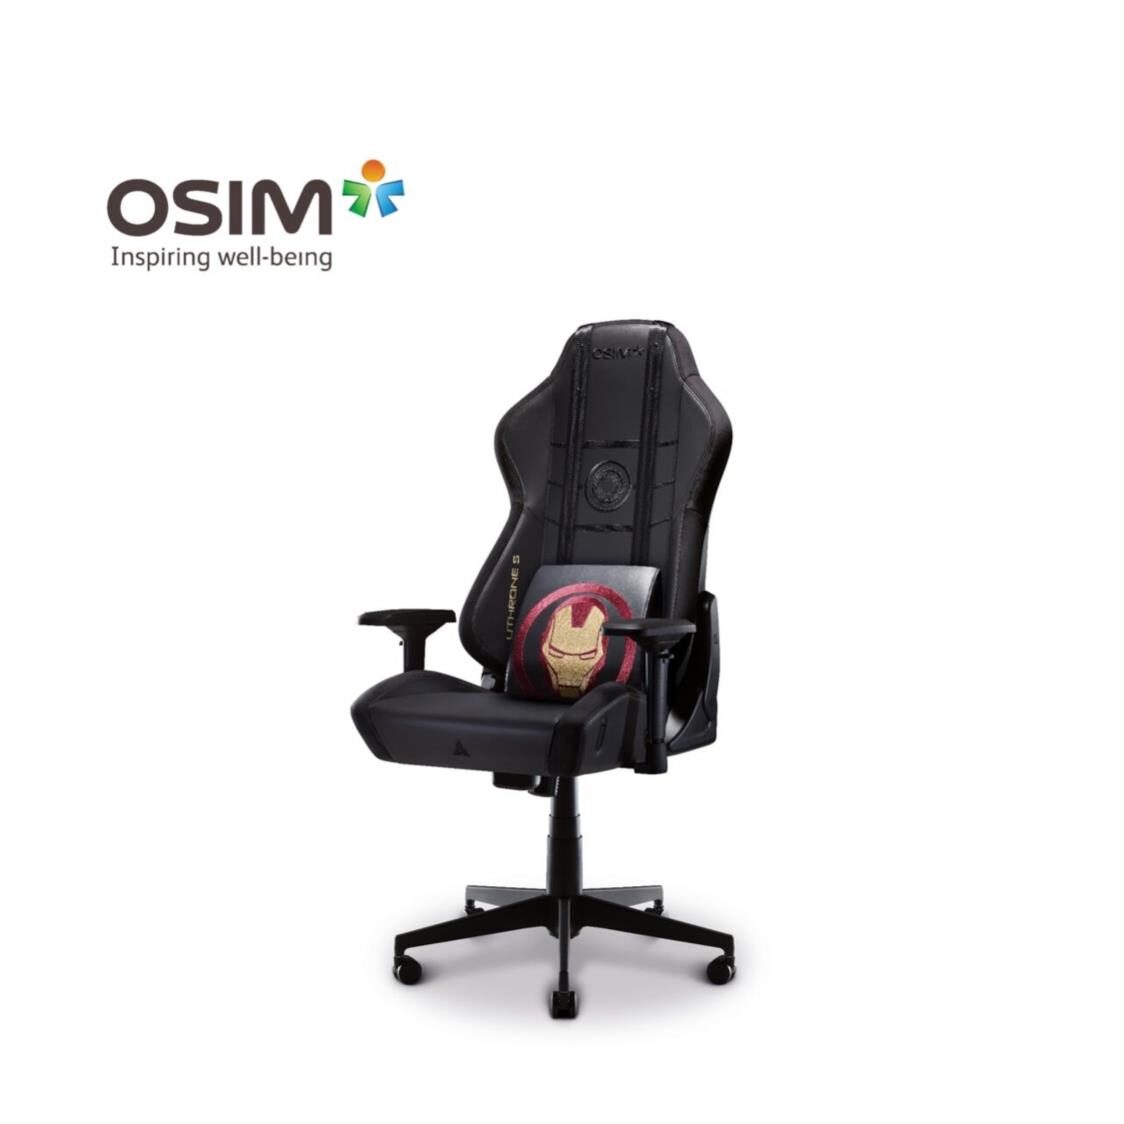 OSIM uThrone S Iron Man Gaming Chair with Customizable Massage  Self Assembled